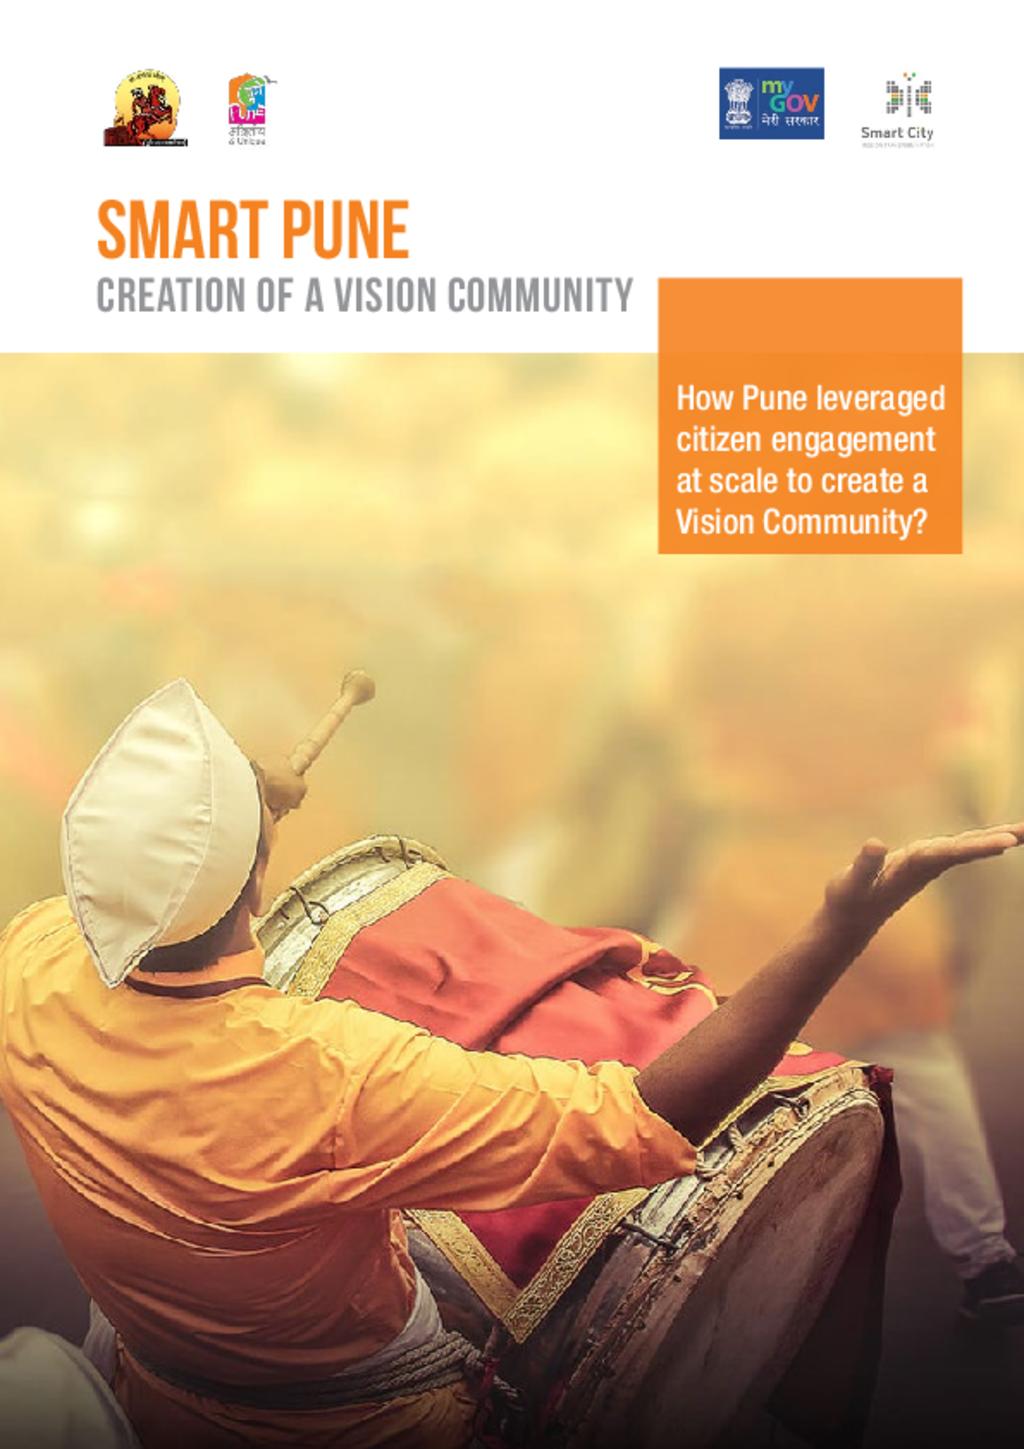 Pune Community involvement